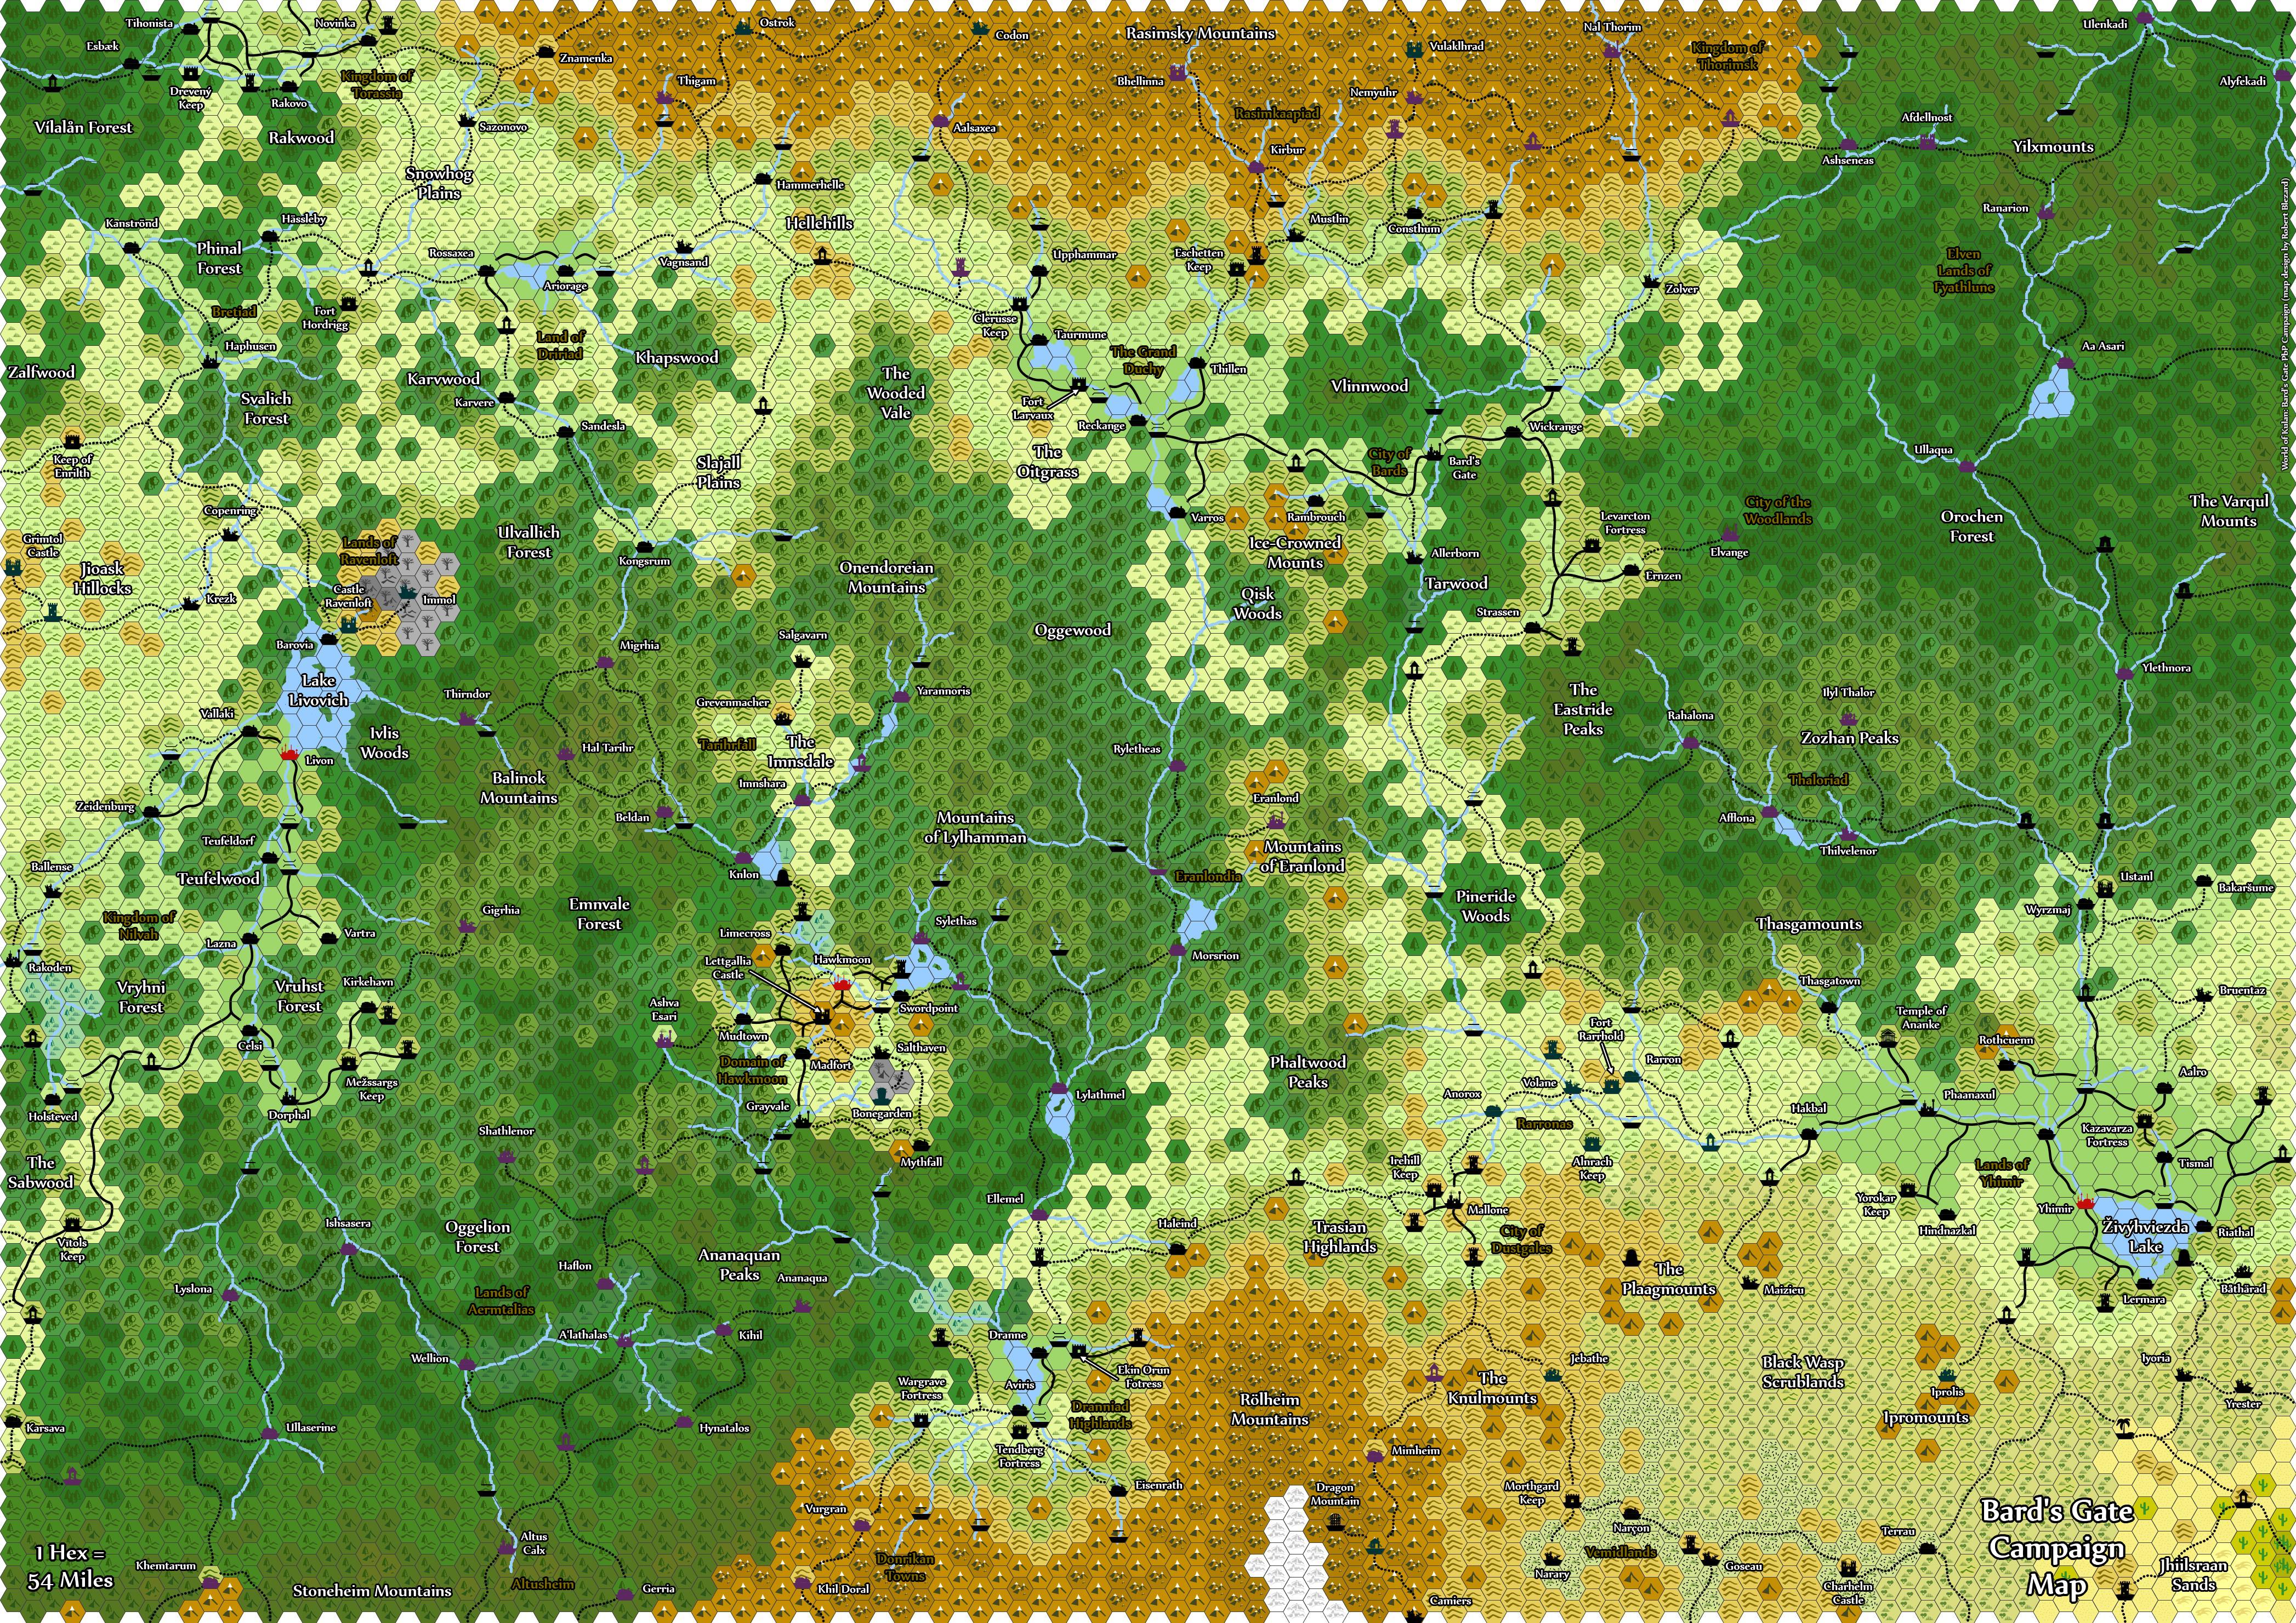 Bard's Gate Campaign Map.jpg